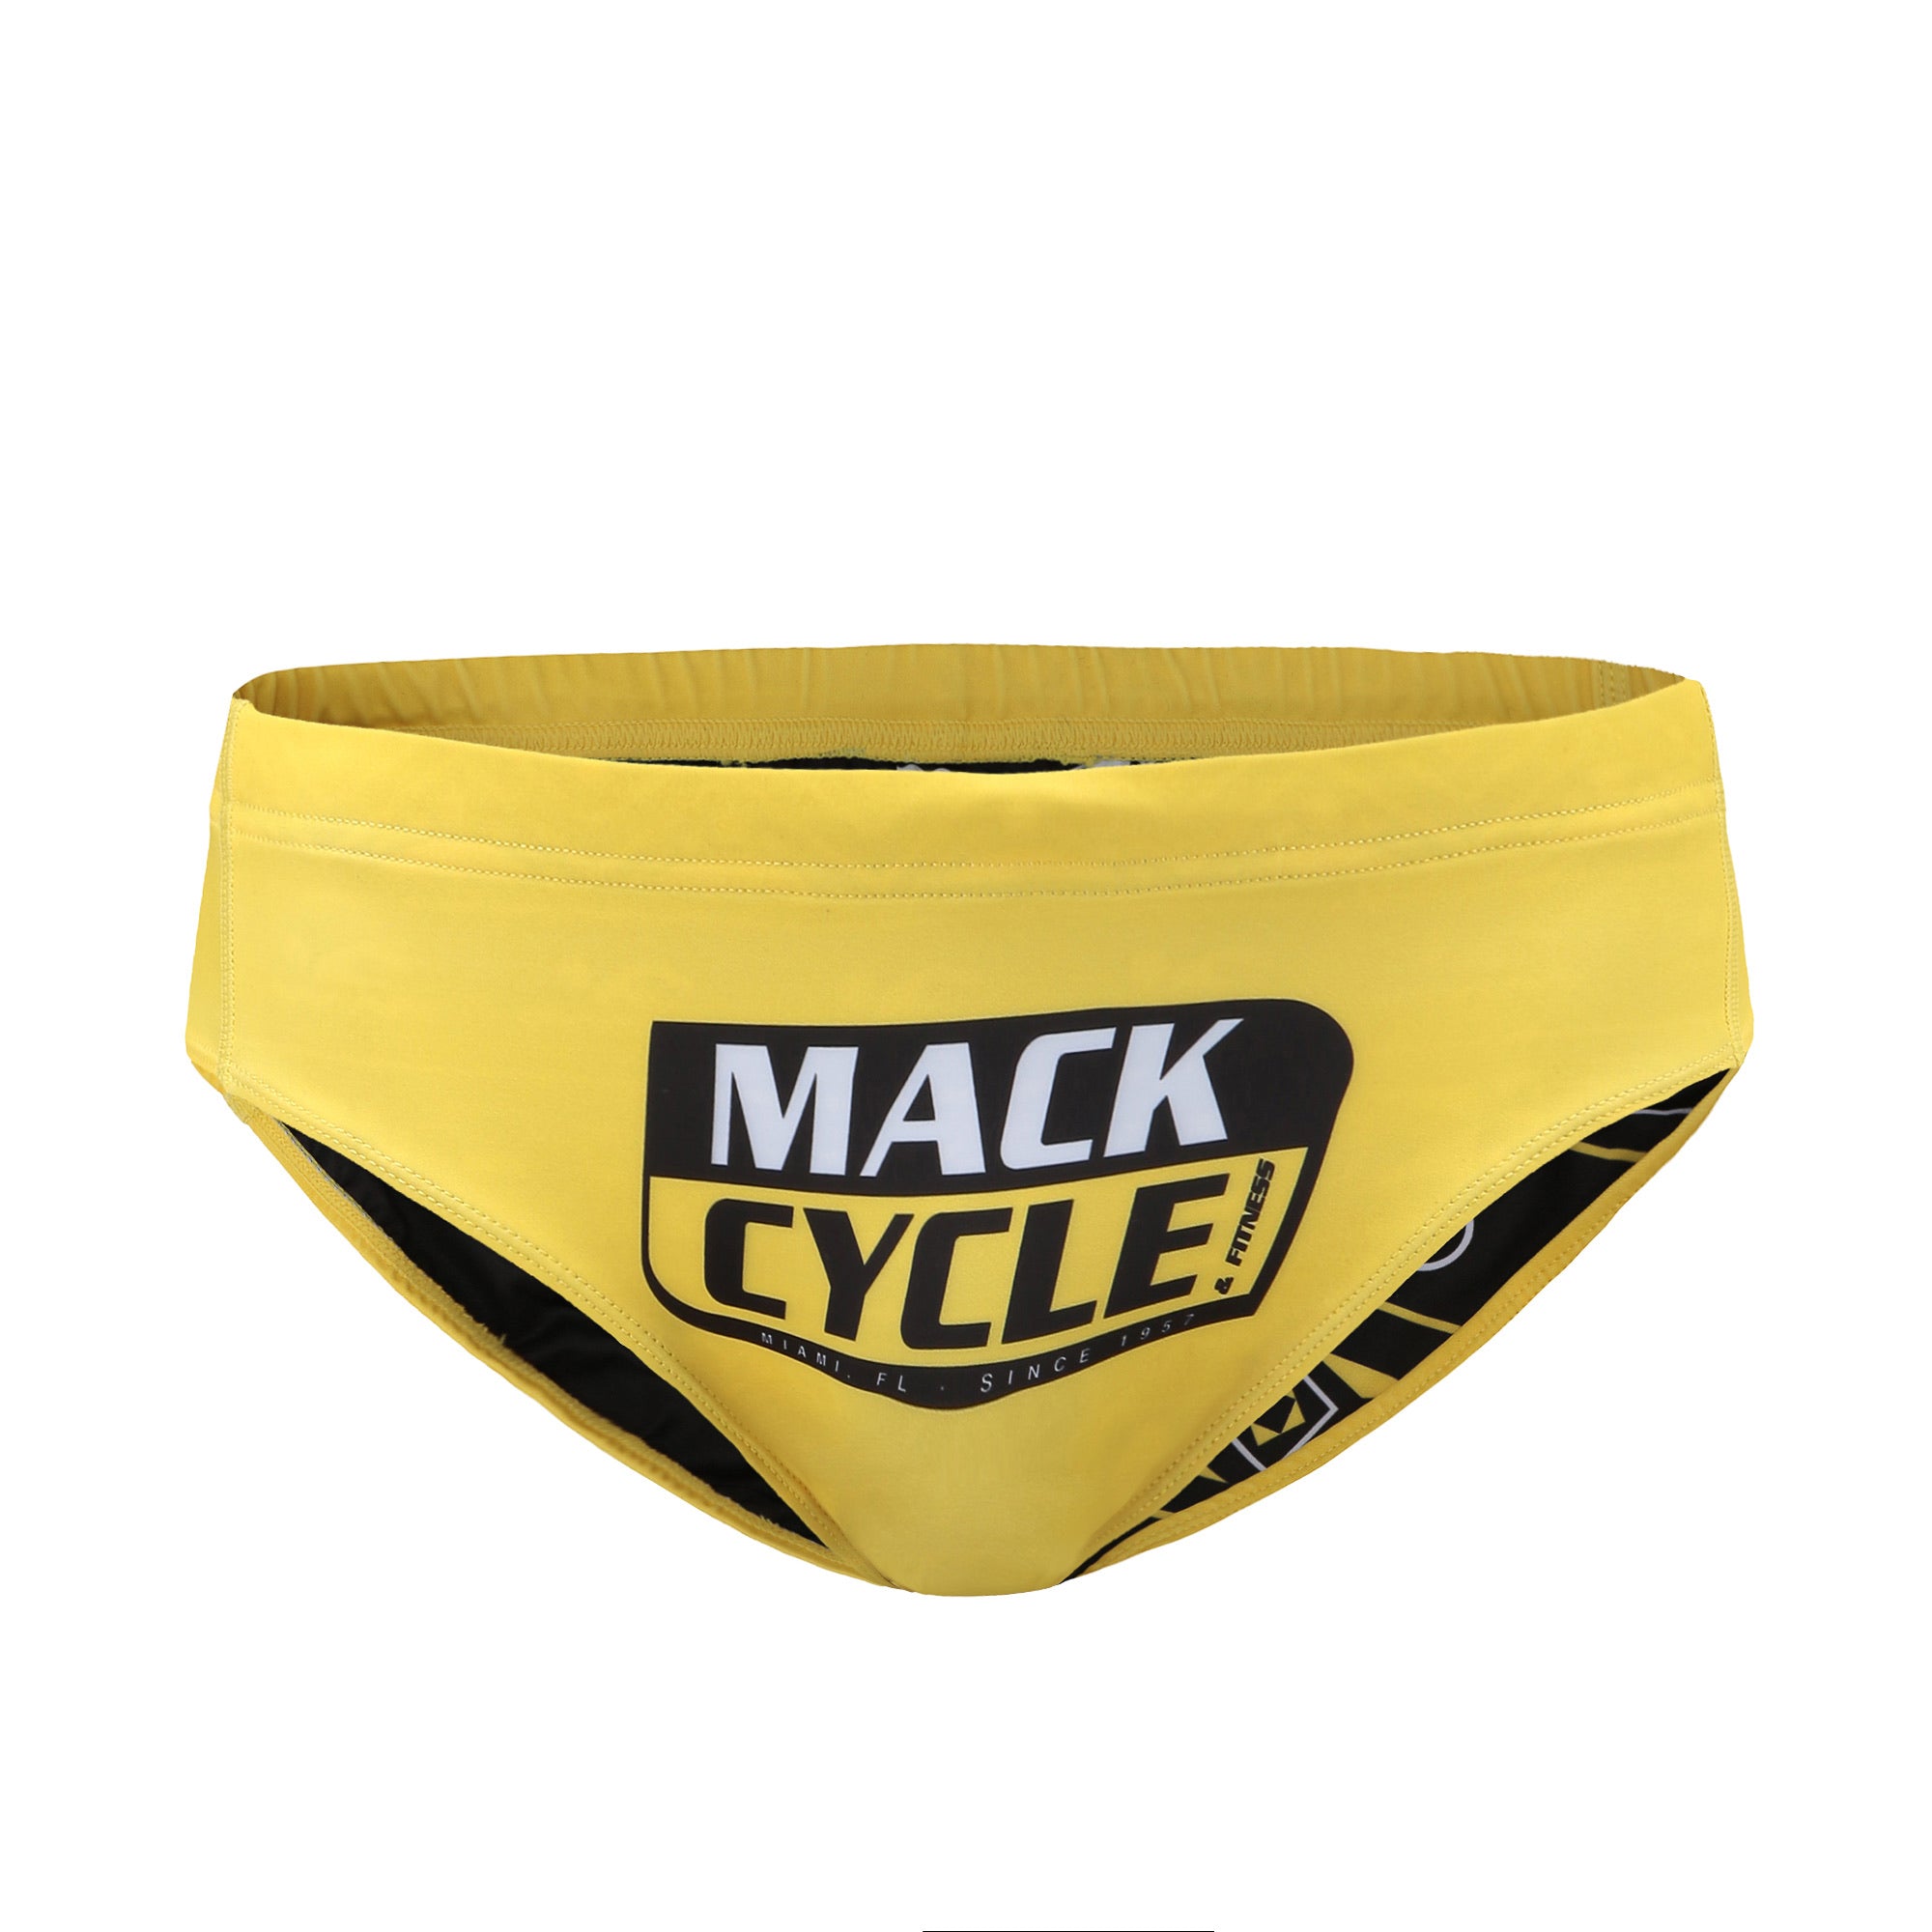 Mack Cycle Men's Yellow Swimmies